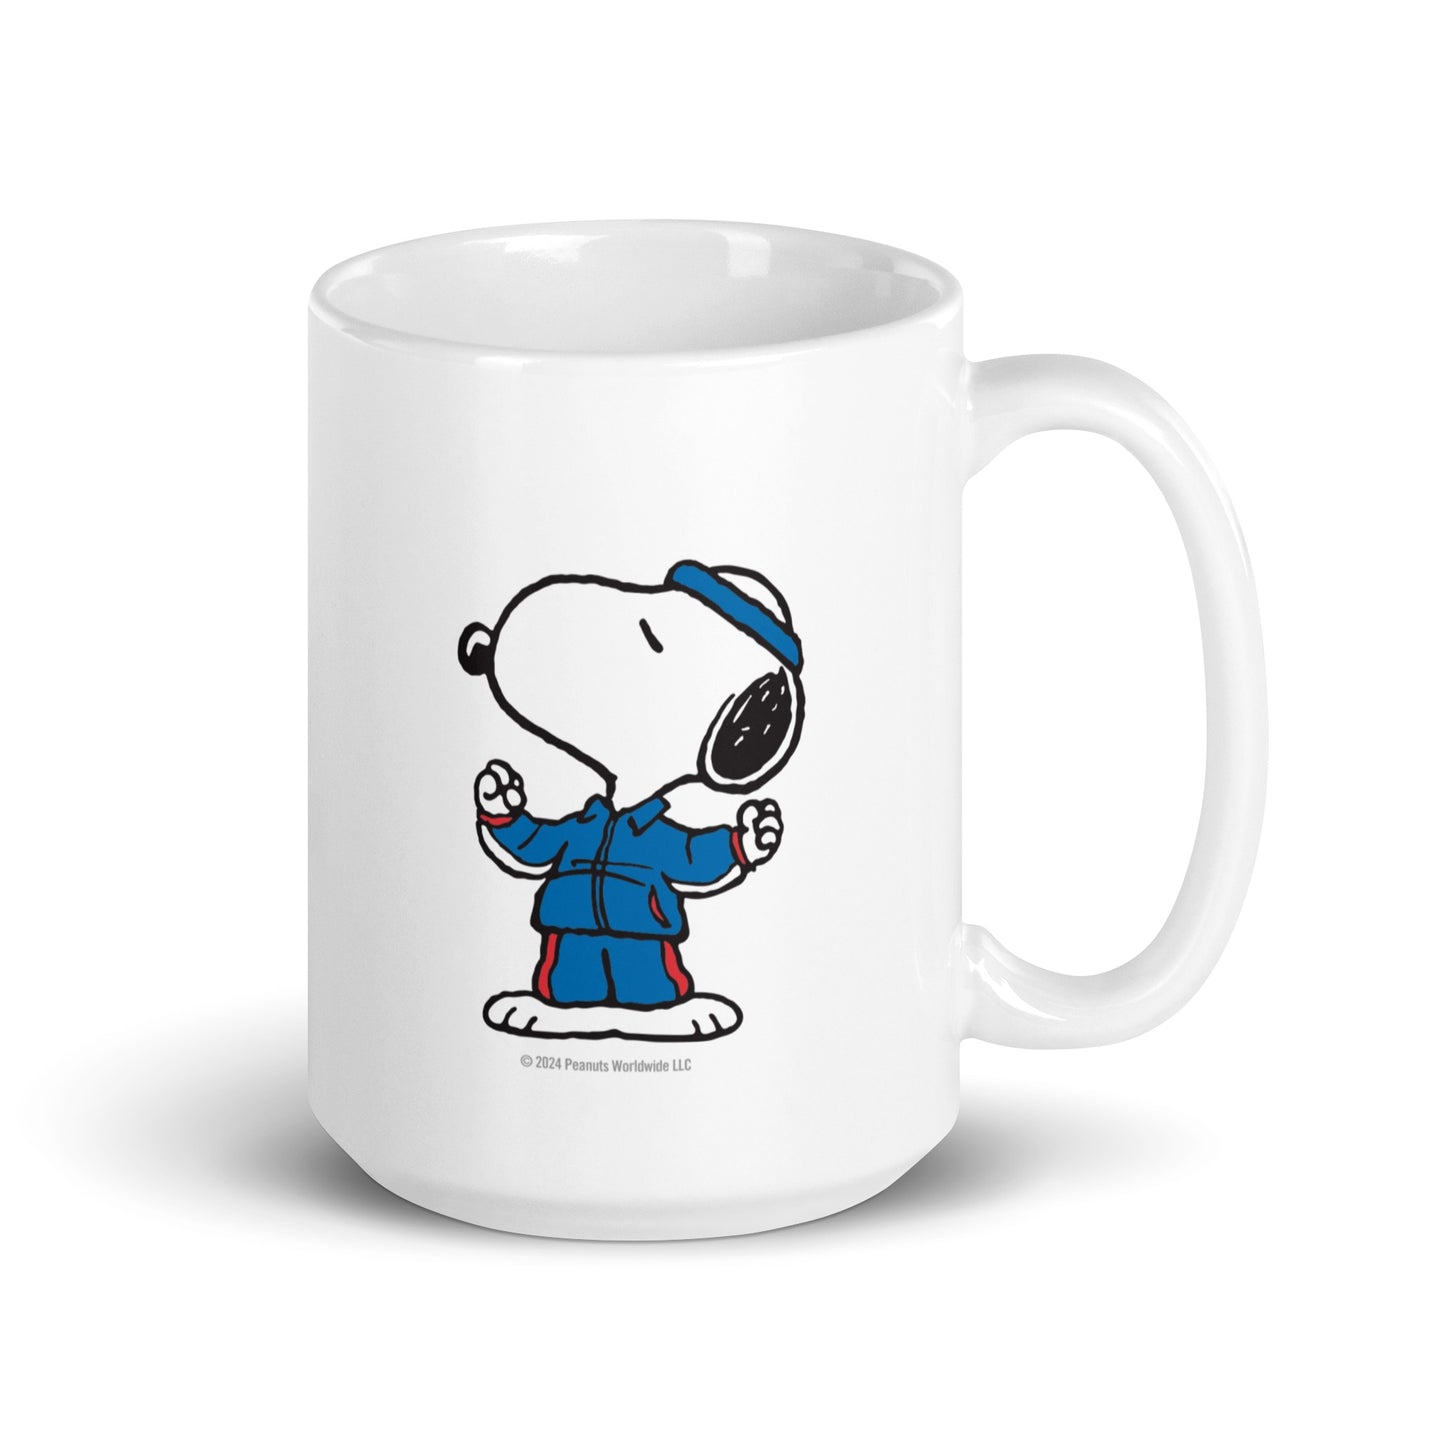 Peanuts Snoopy Team USA Flag White Mug